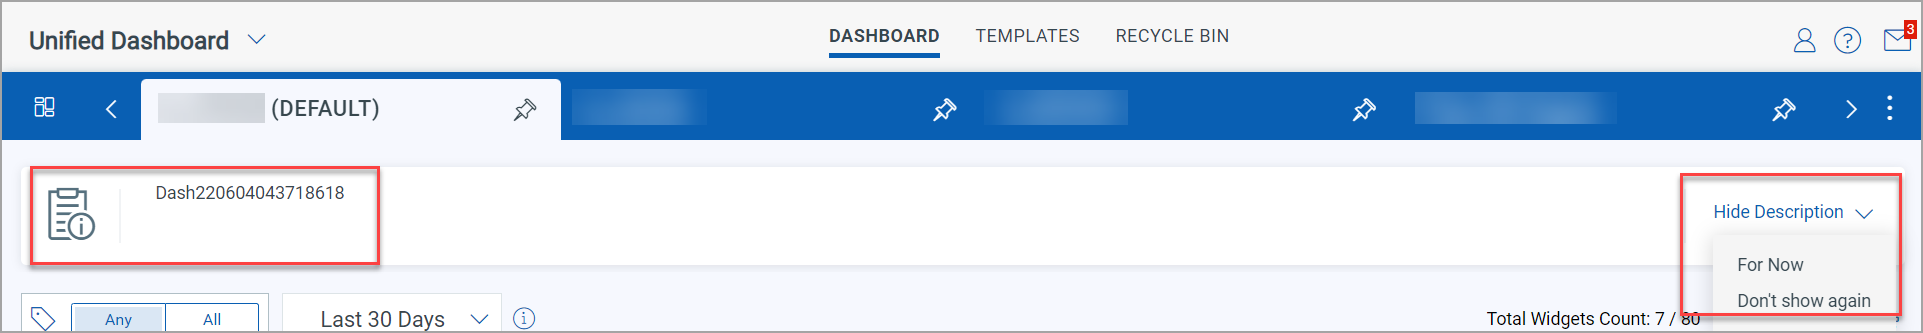 Dashboard description on dashboard page.